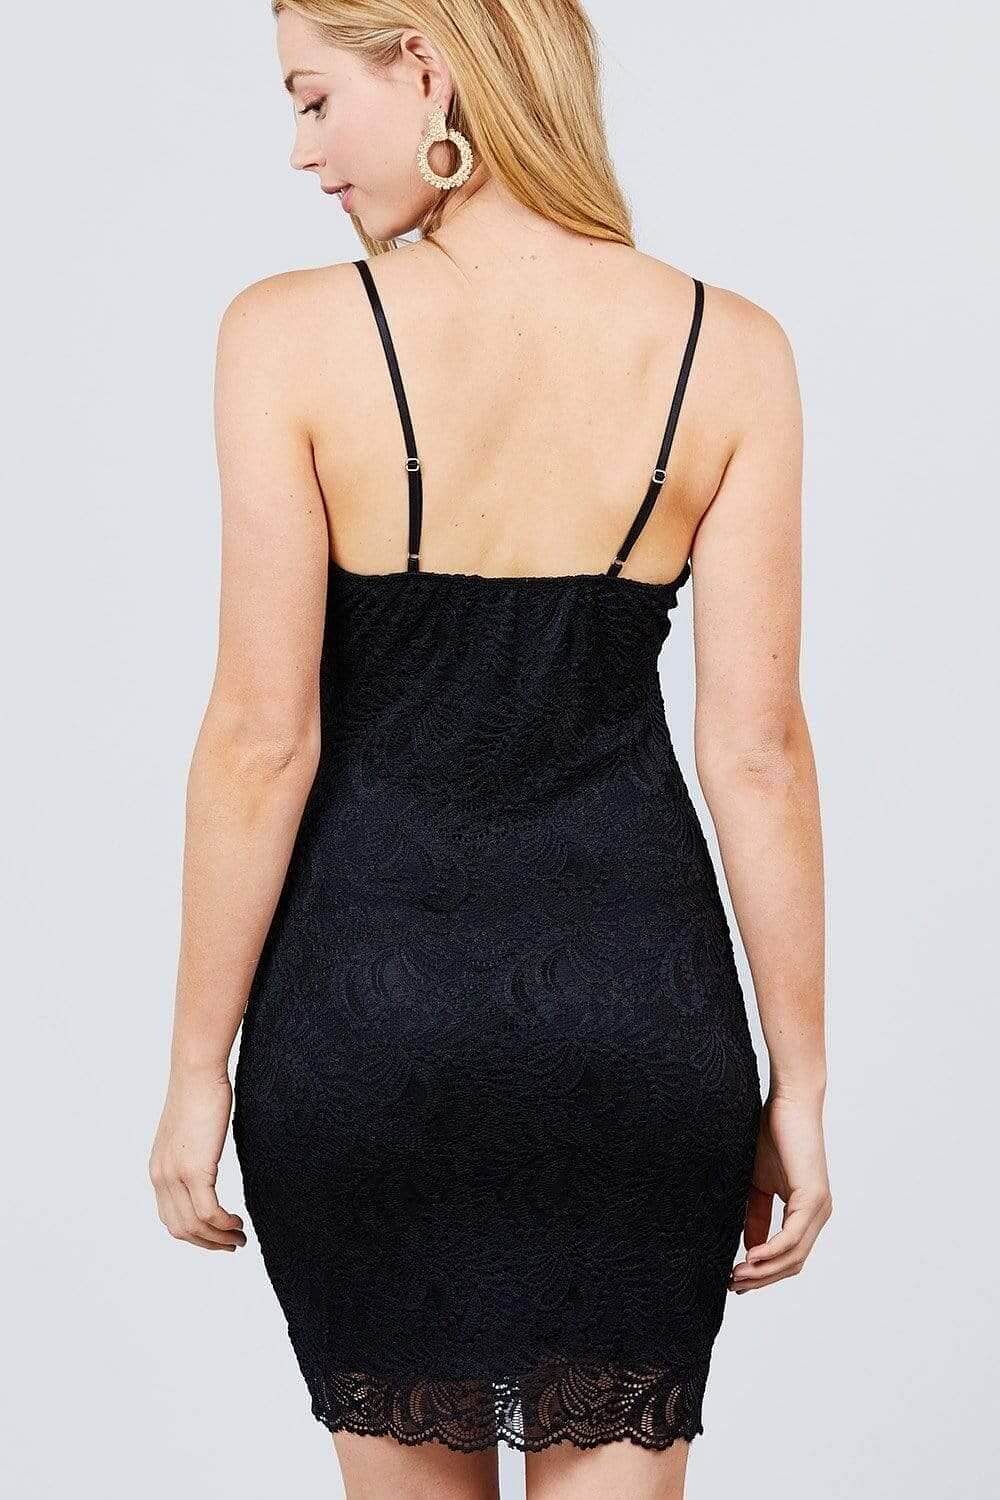 Black Spaghetti Strap Bodycon Dress - Shopping Therapy, LLC Dress